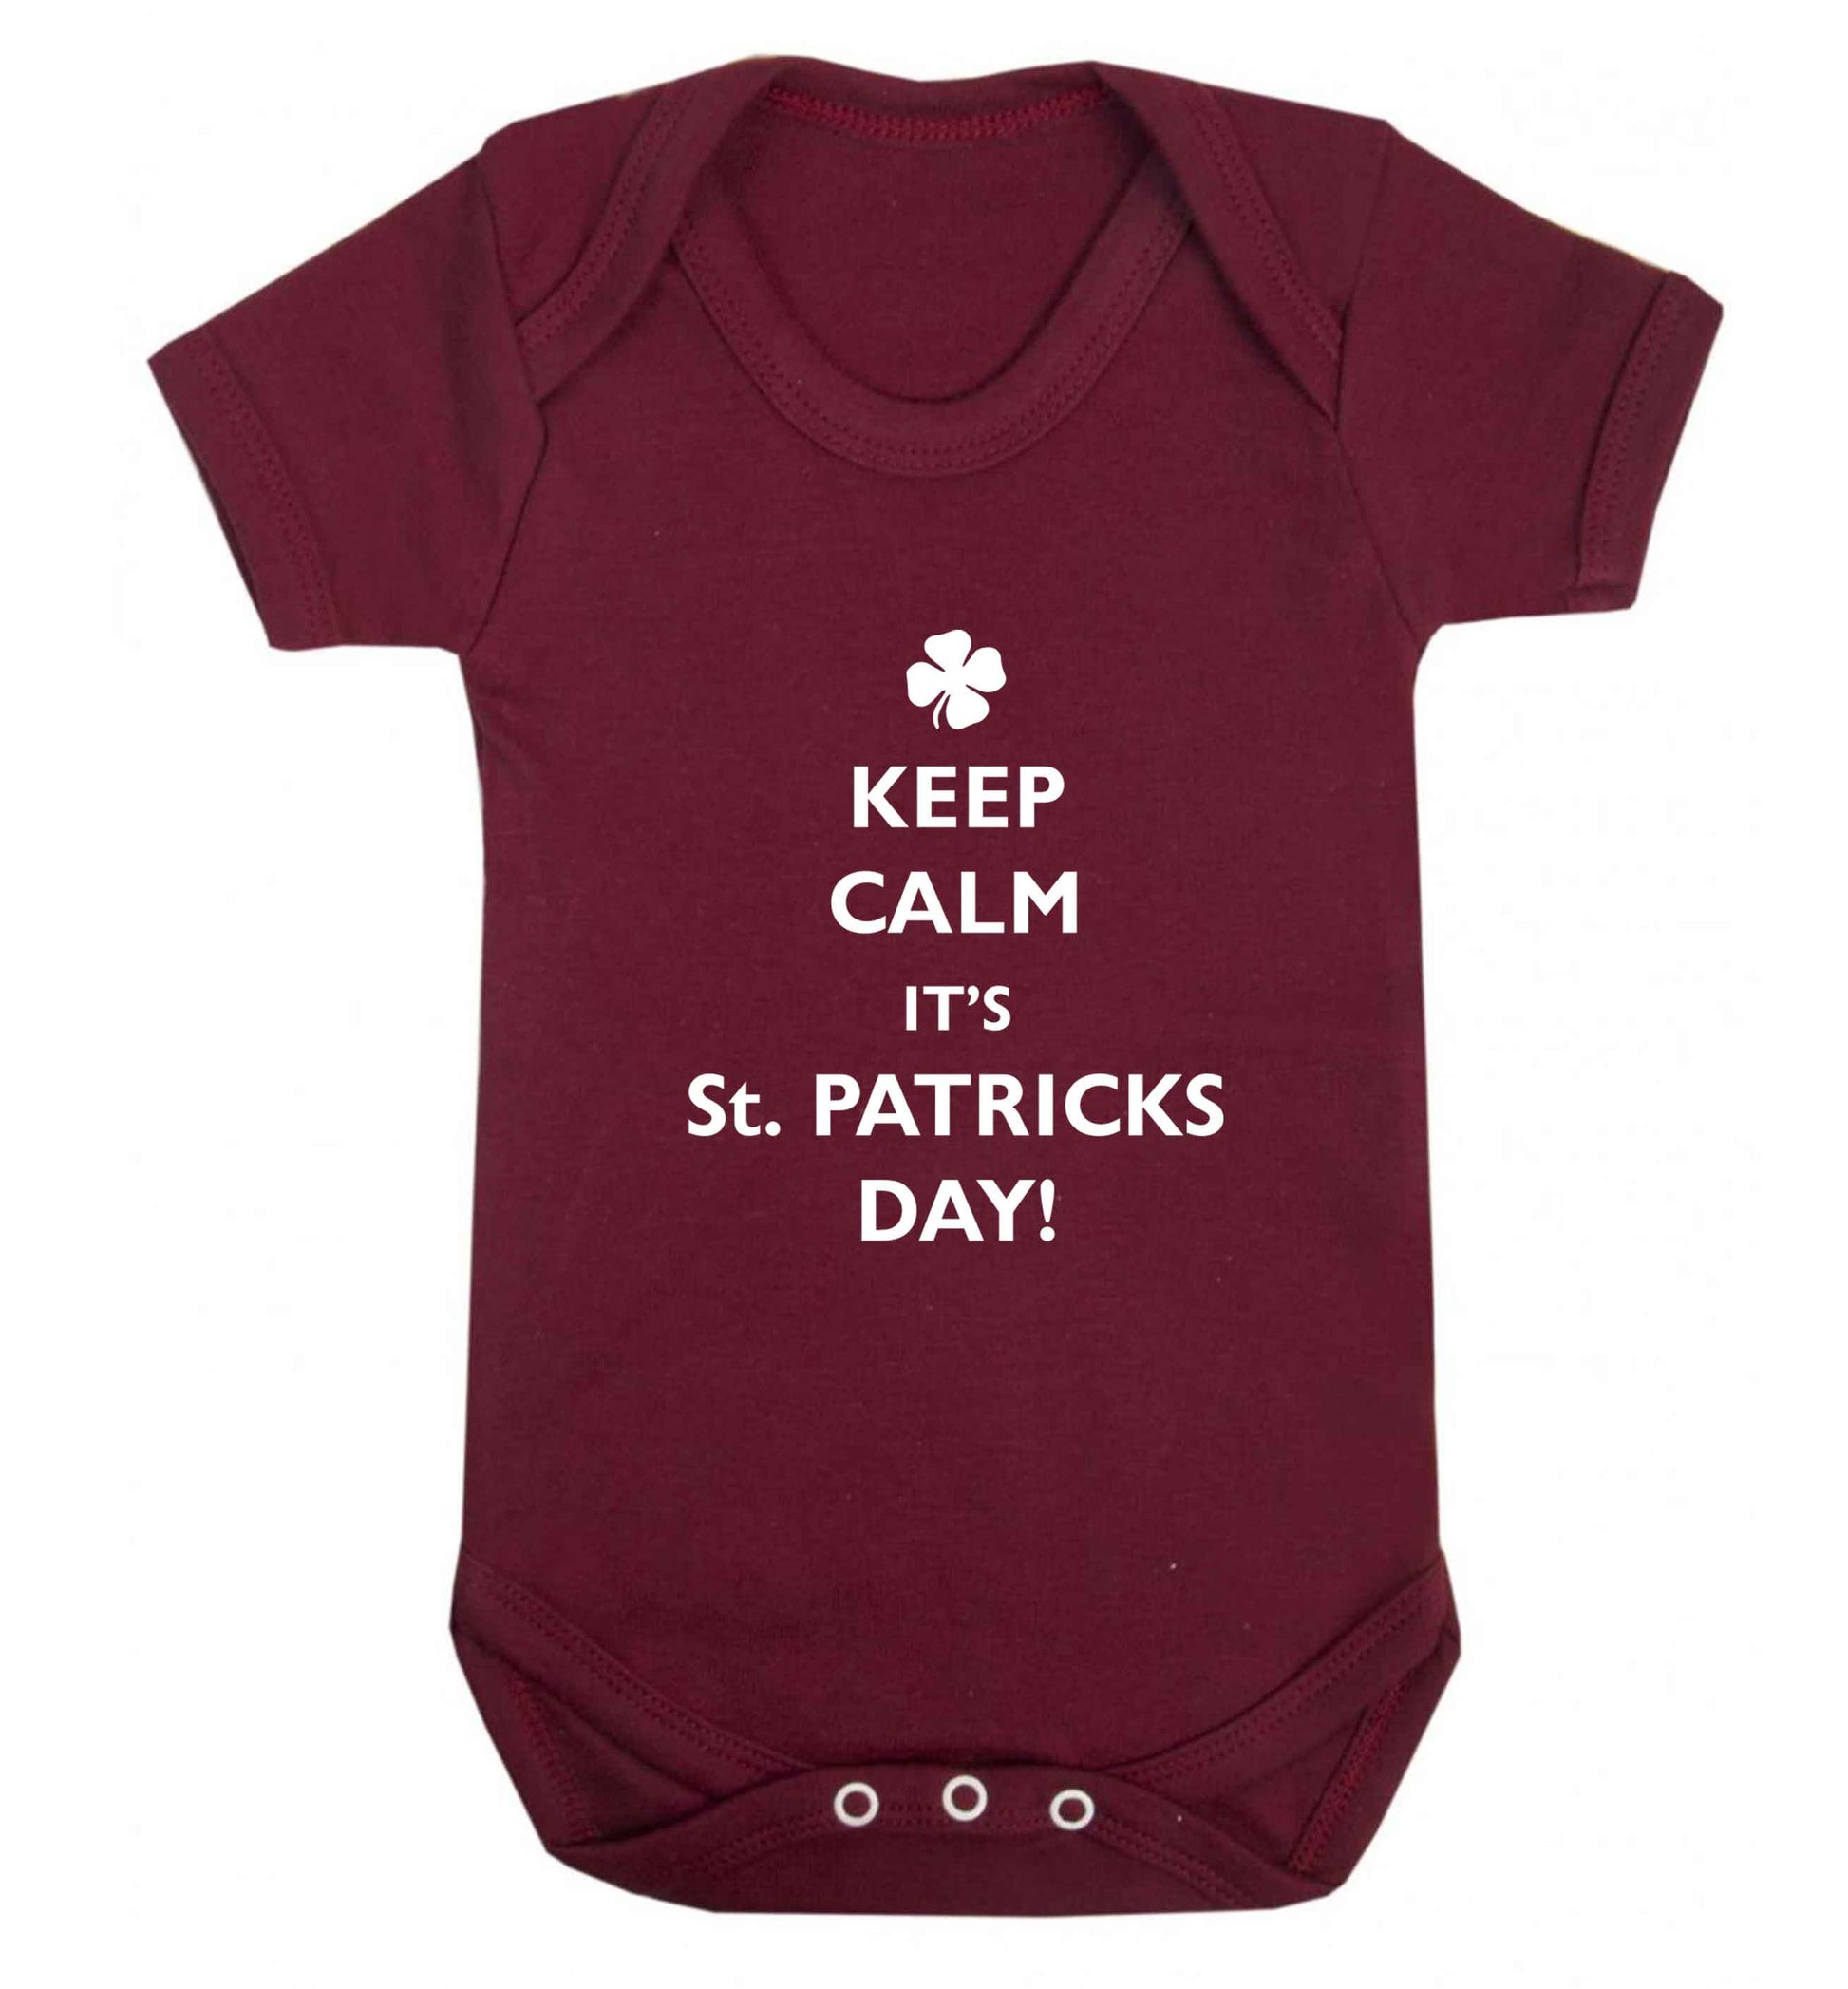 Keep calm it's St.Patricks day baby vest maroon 18-24 months